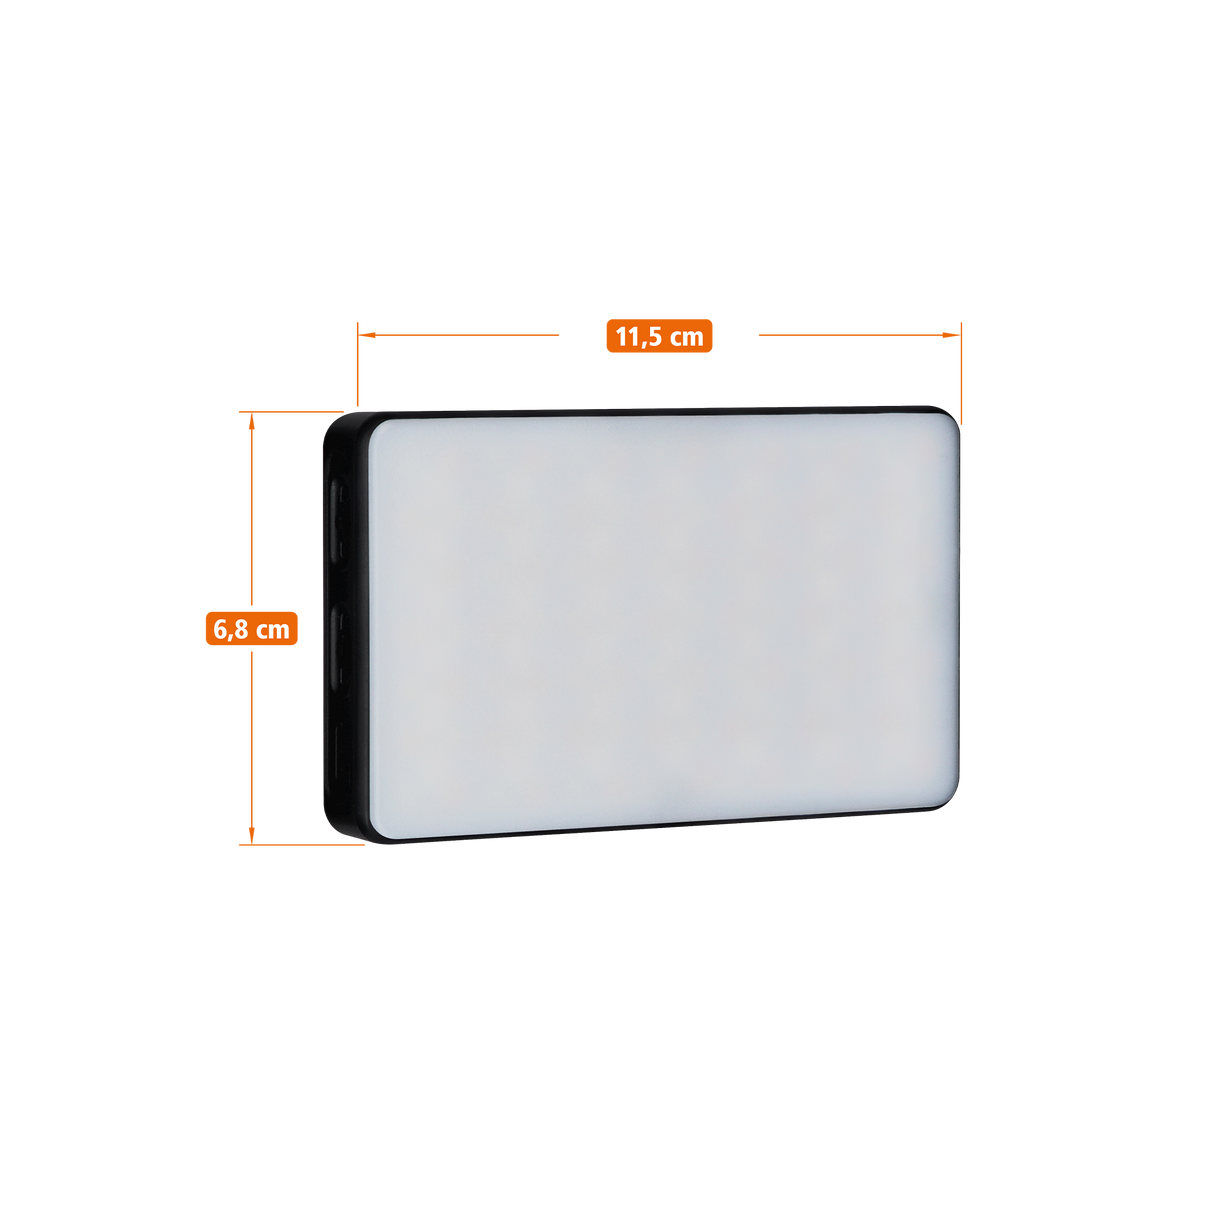 LUMIS Compact RGB - Kleines LED-Licht – Rollei